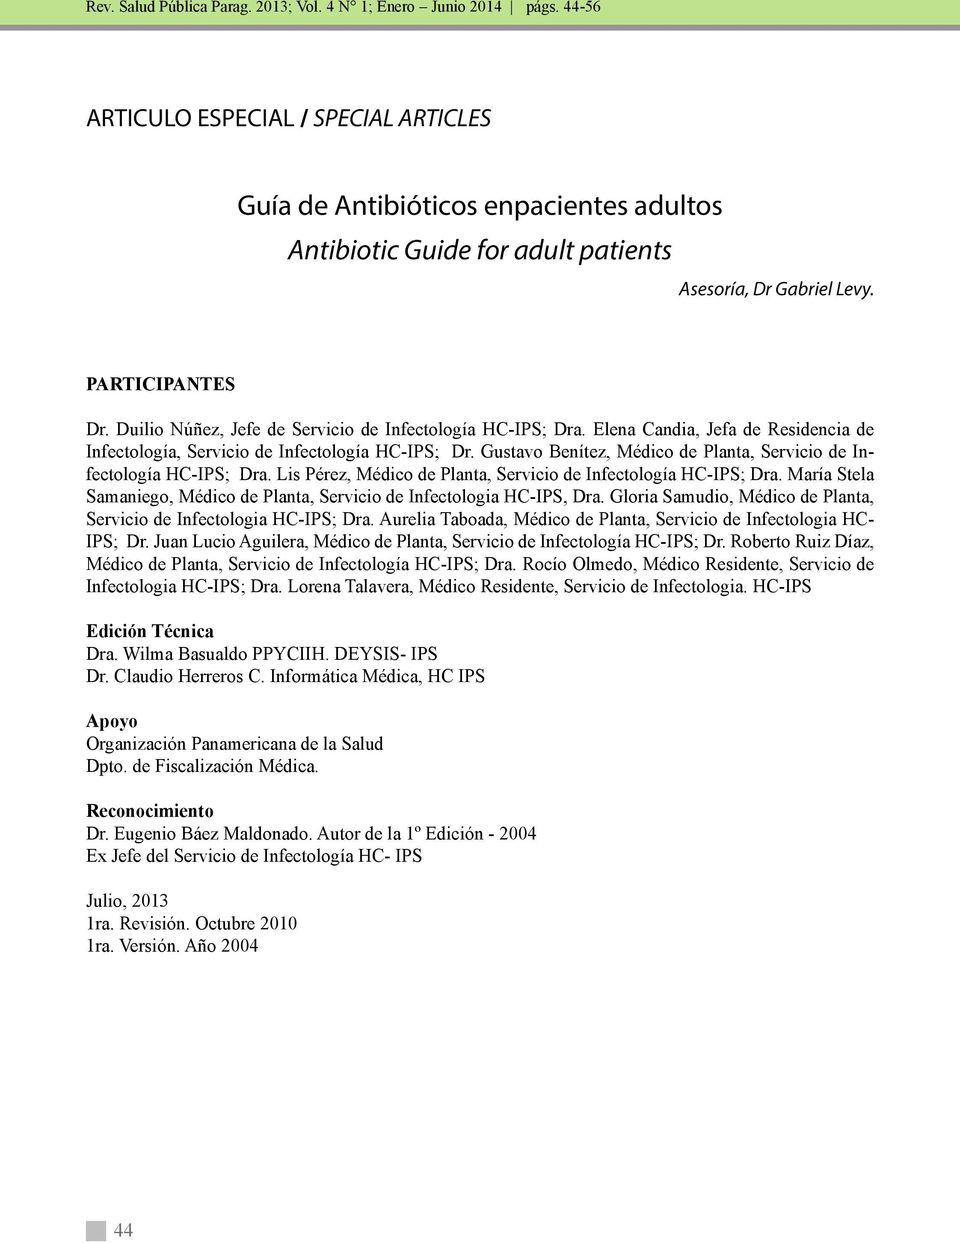 Gustavo Benítez, Médico de Planta, Servicio de Infectología HC-IPS; Dra. Lis Pérez, Médico de Planta, Servicio de Infectología HC-IPS; Dra.